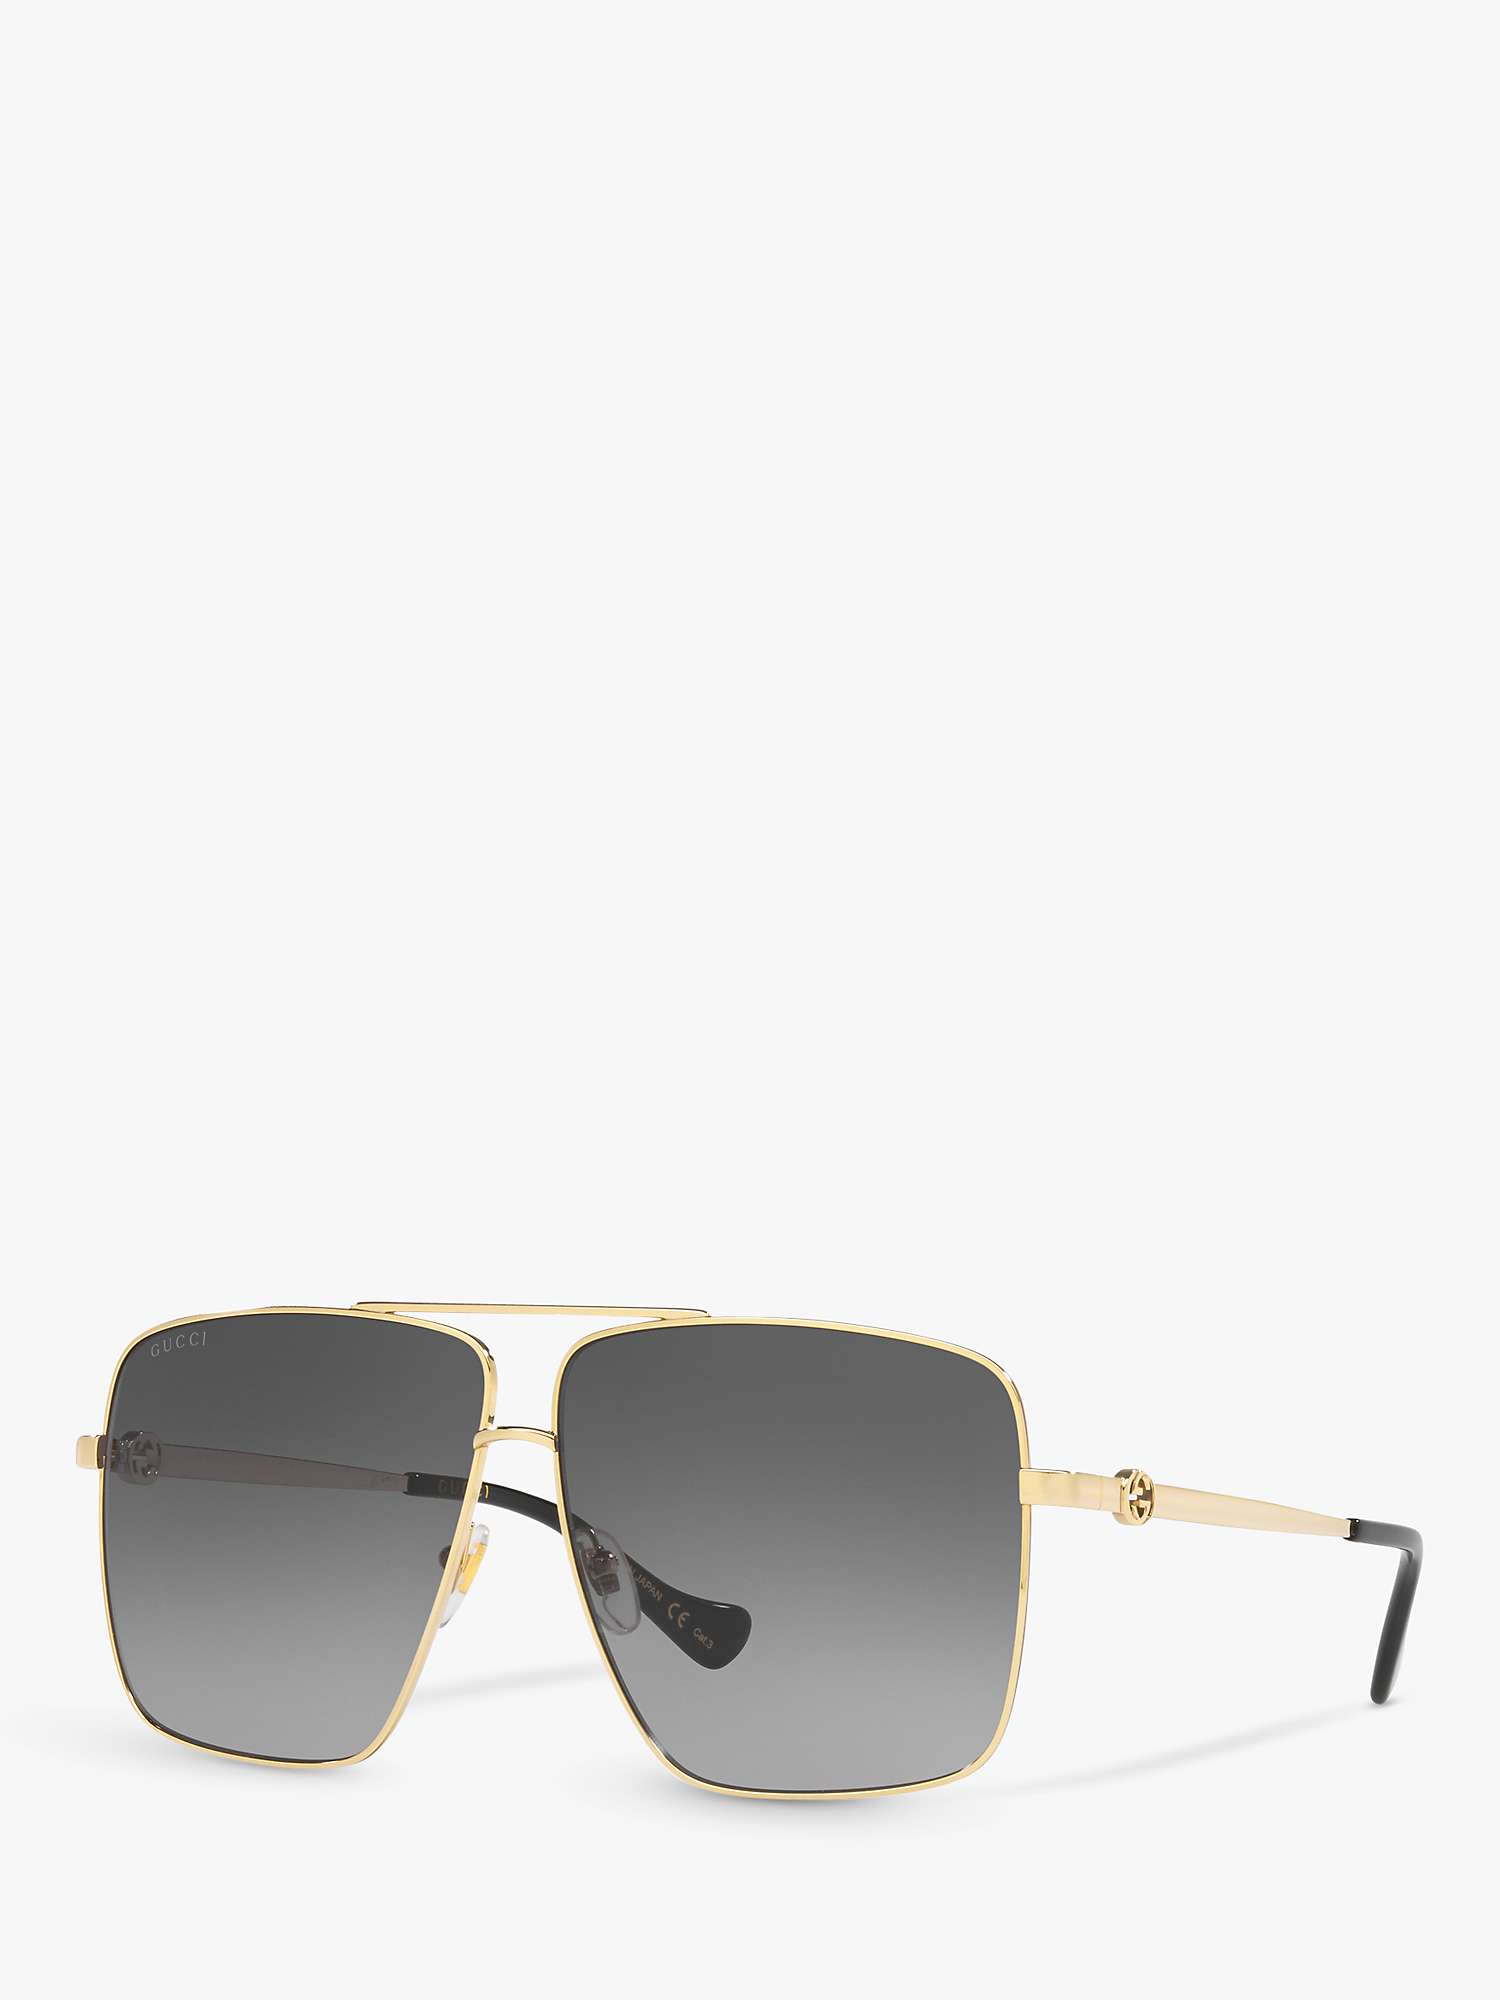 Gucci GG1087S Women's Aviator Sunglasses, Gold/Grey Gradient at John ...